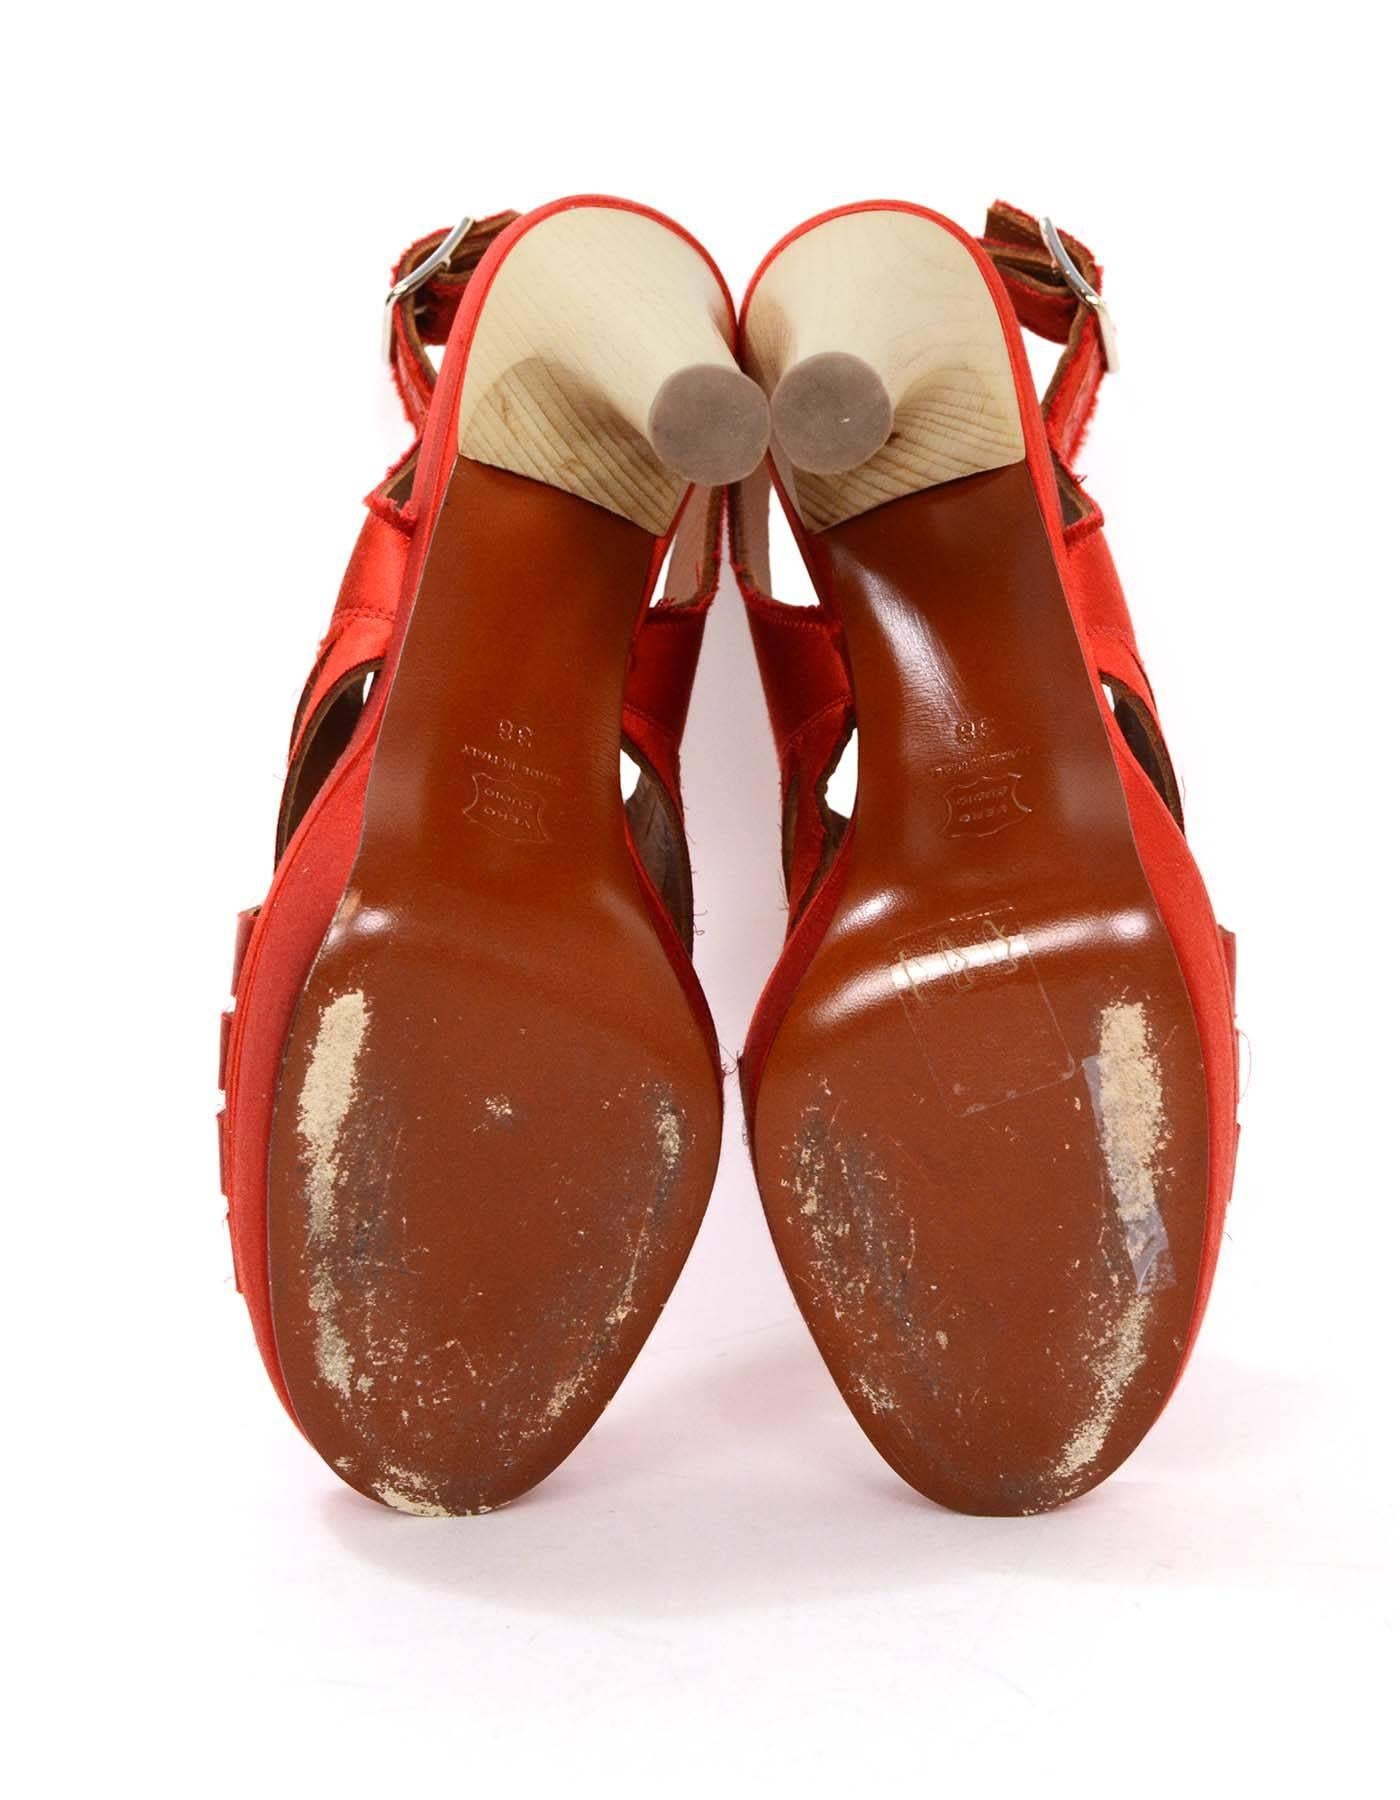 Lanvin Red Satin Strappy Sandals sz 38 3